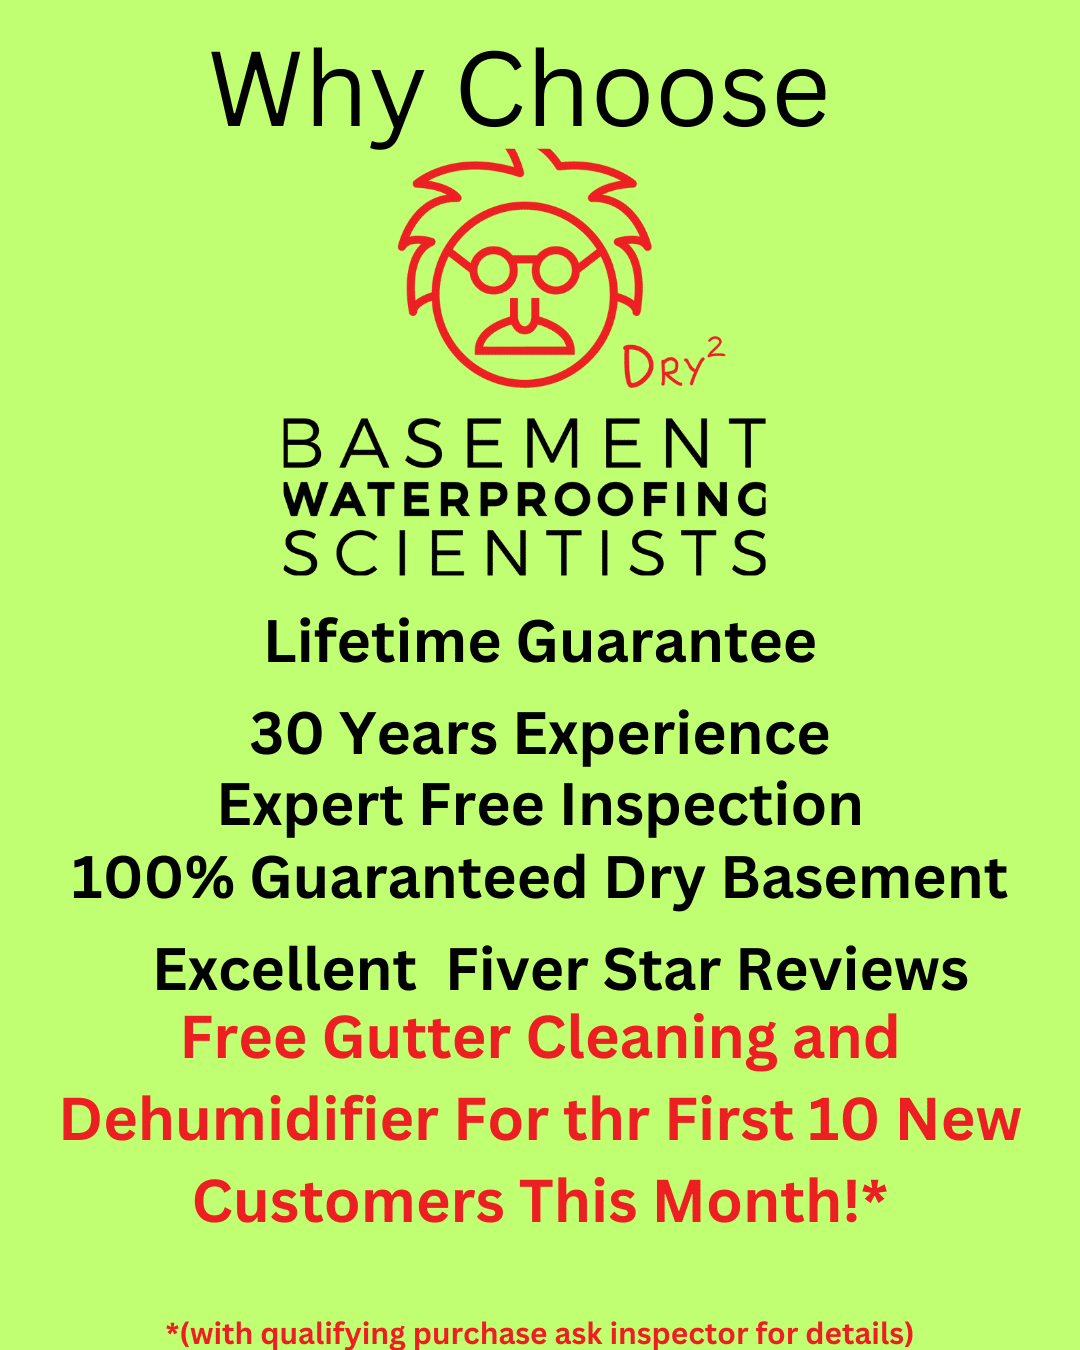 Services - Basement Waterproofing Scientists